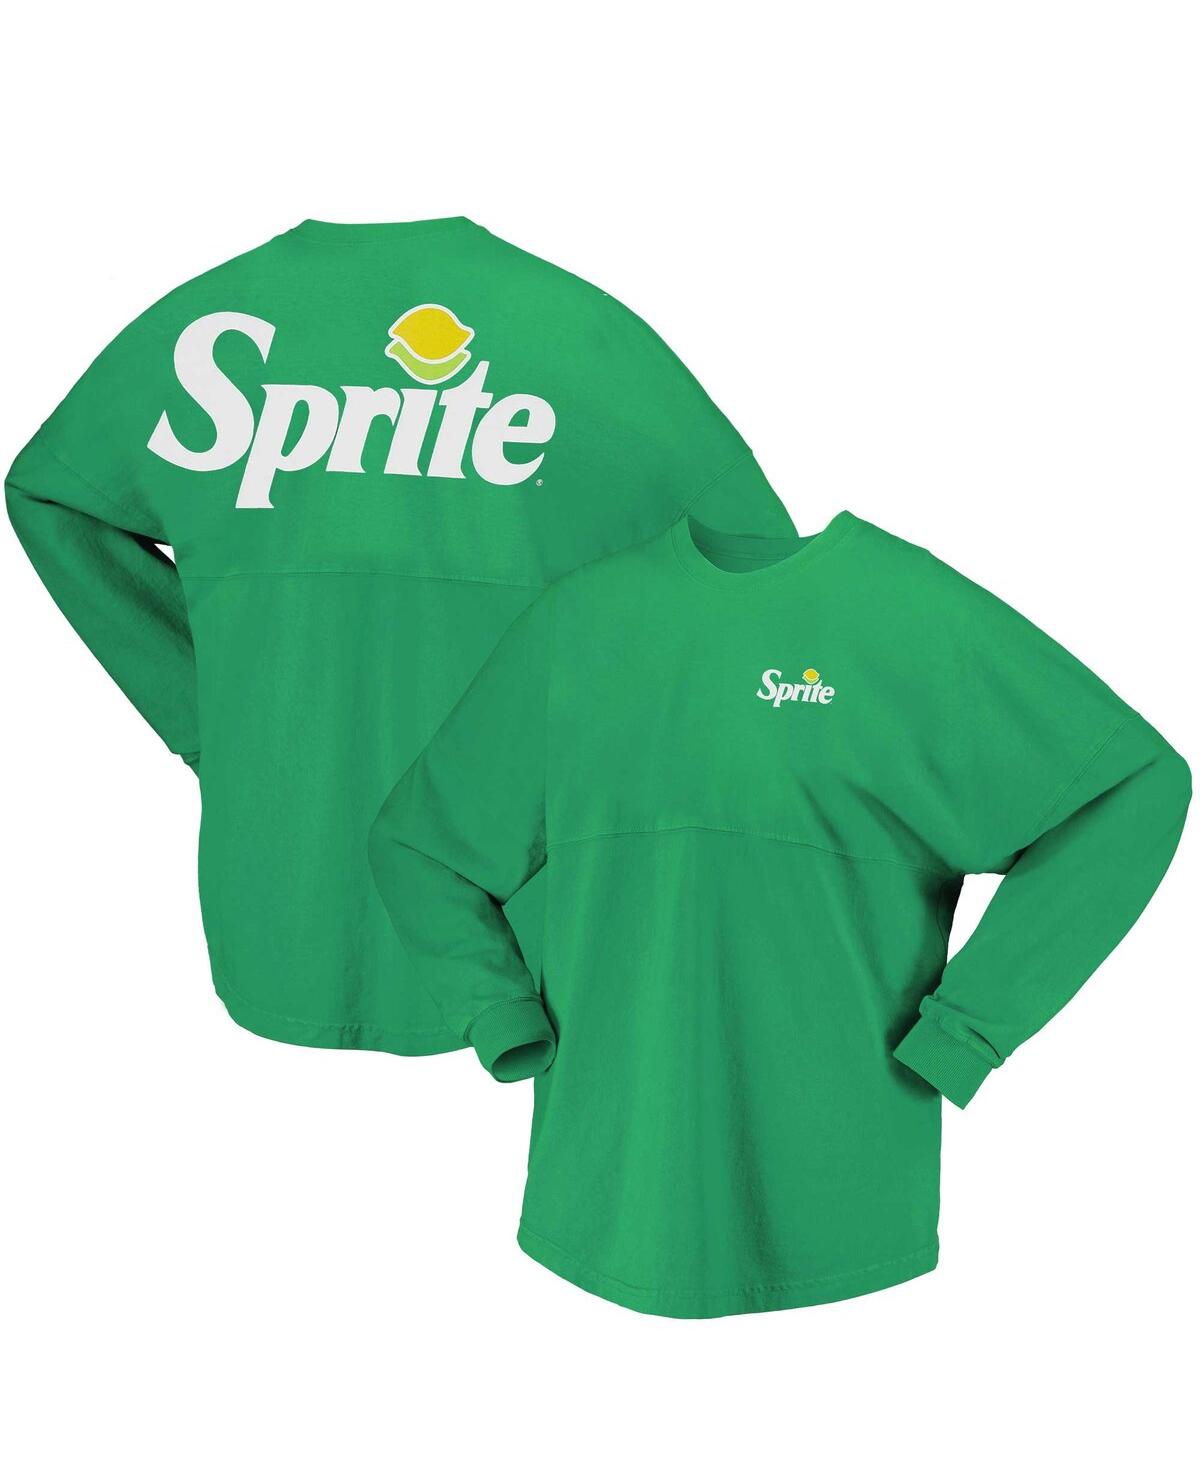 Men's and Women's Green Sprite Long Sleeve T-shirt - Green